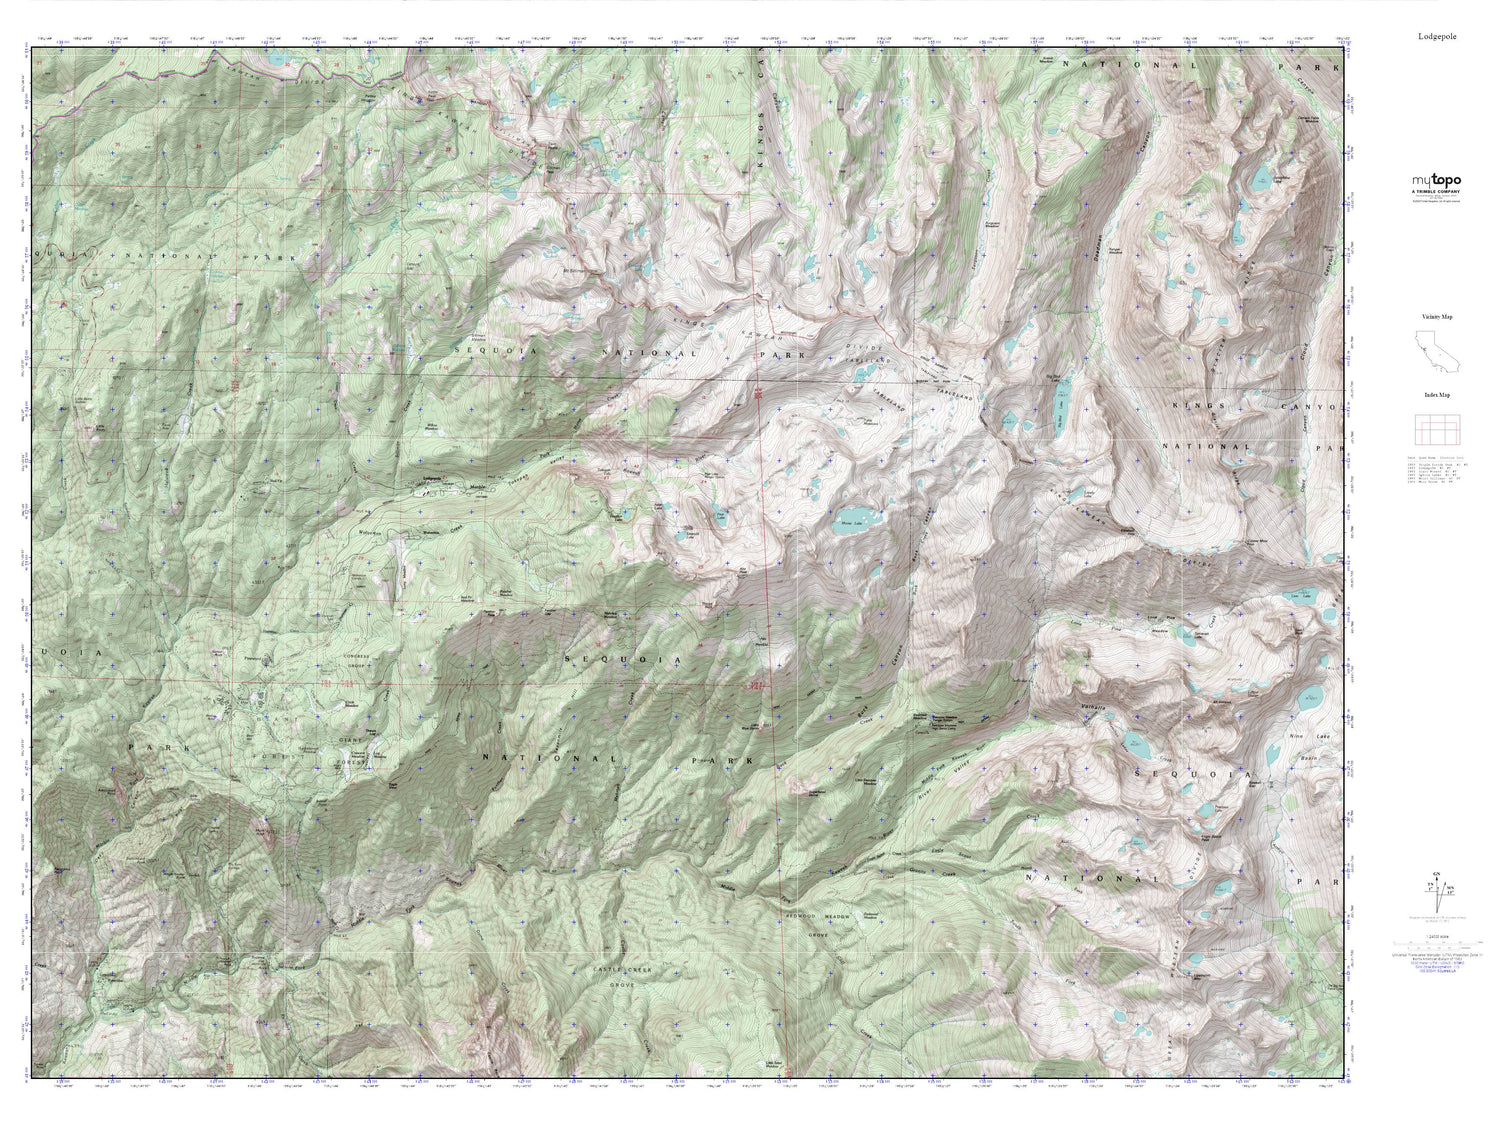 Lodgepole MyTopo Explorer Series Map Image